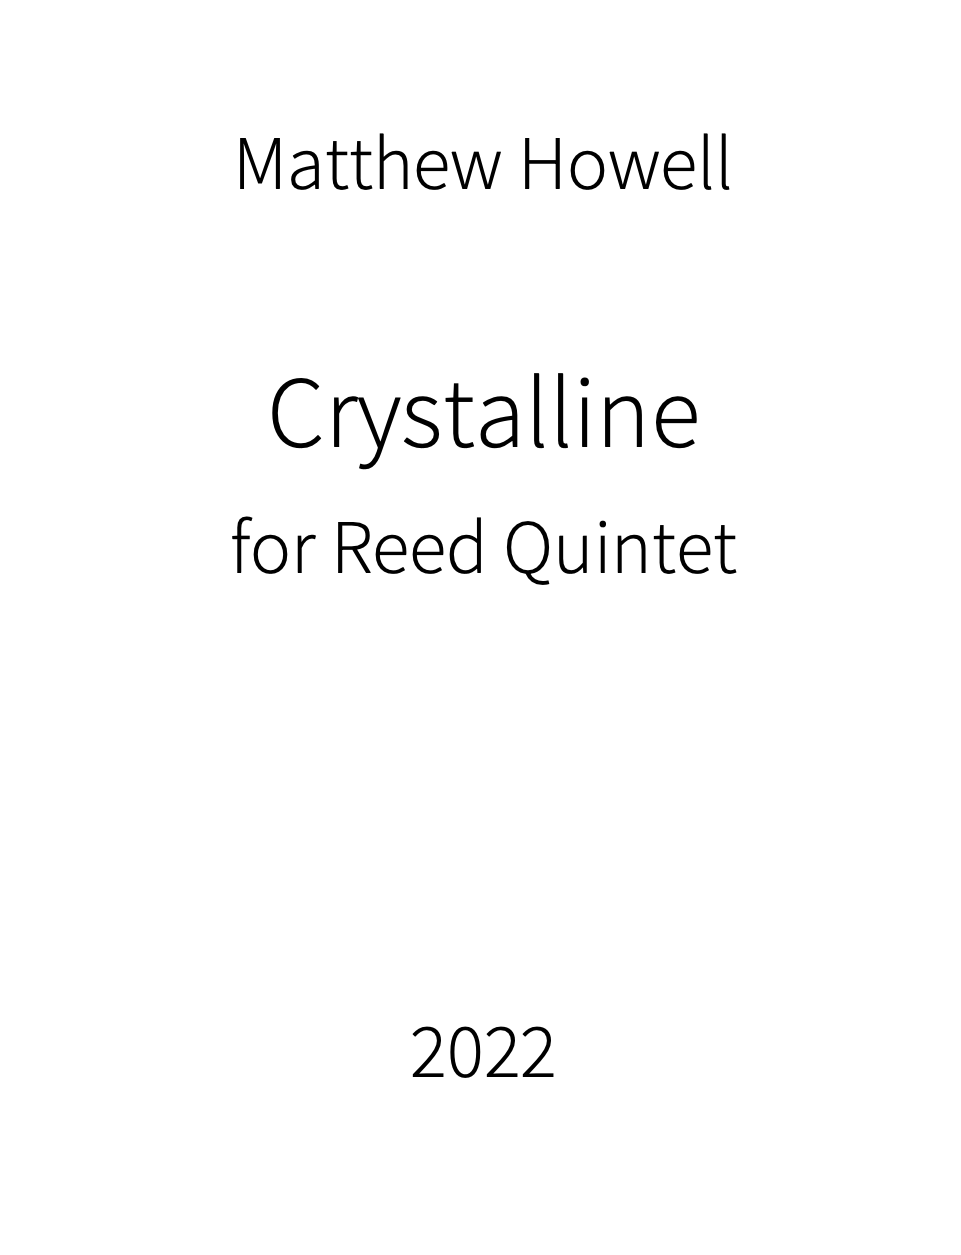 Crystalline by Matthew Howell